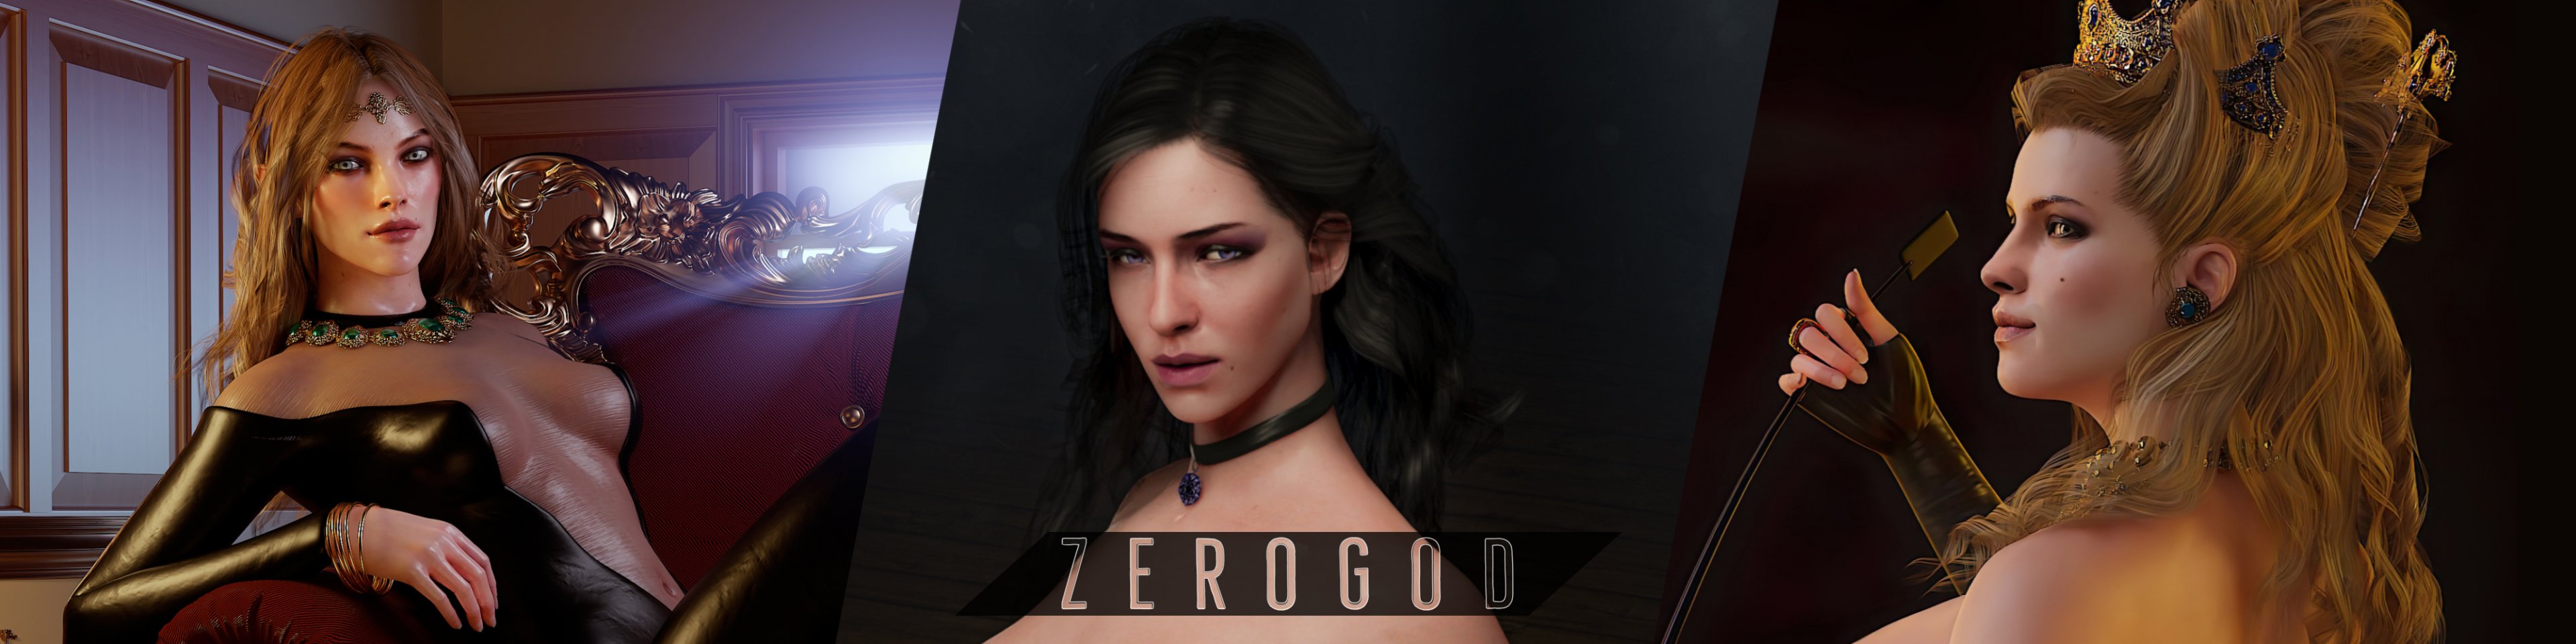 zerogod_custom-cover_by_maleficent.jpg